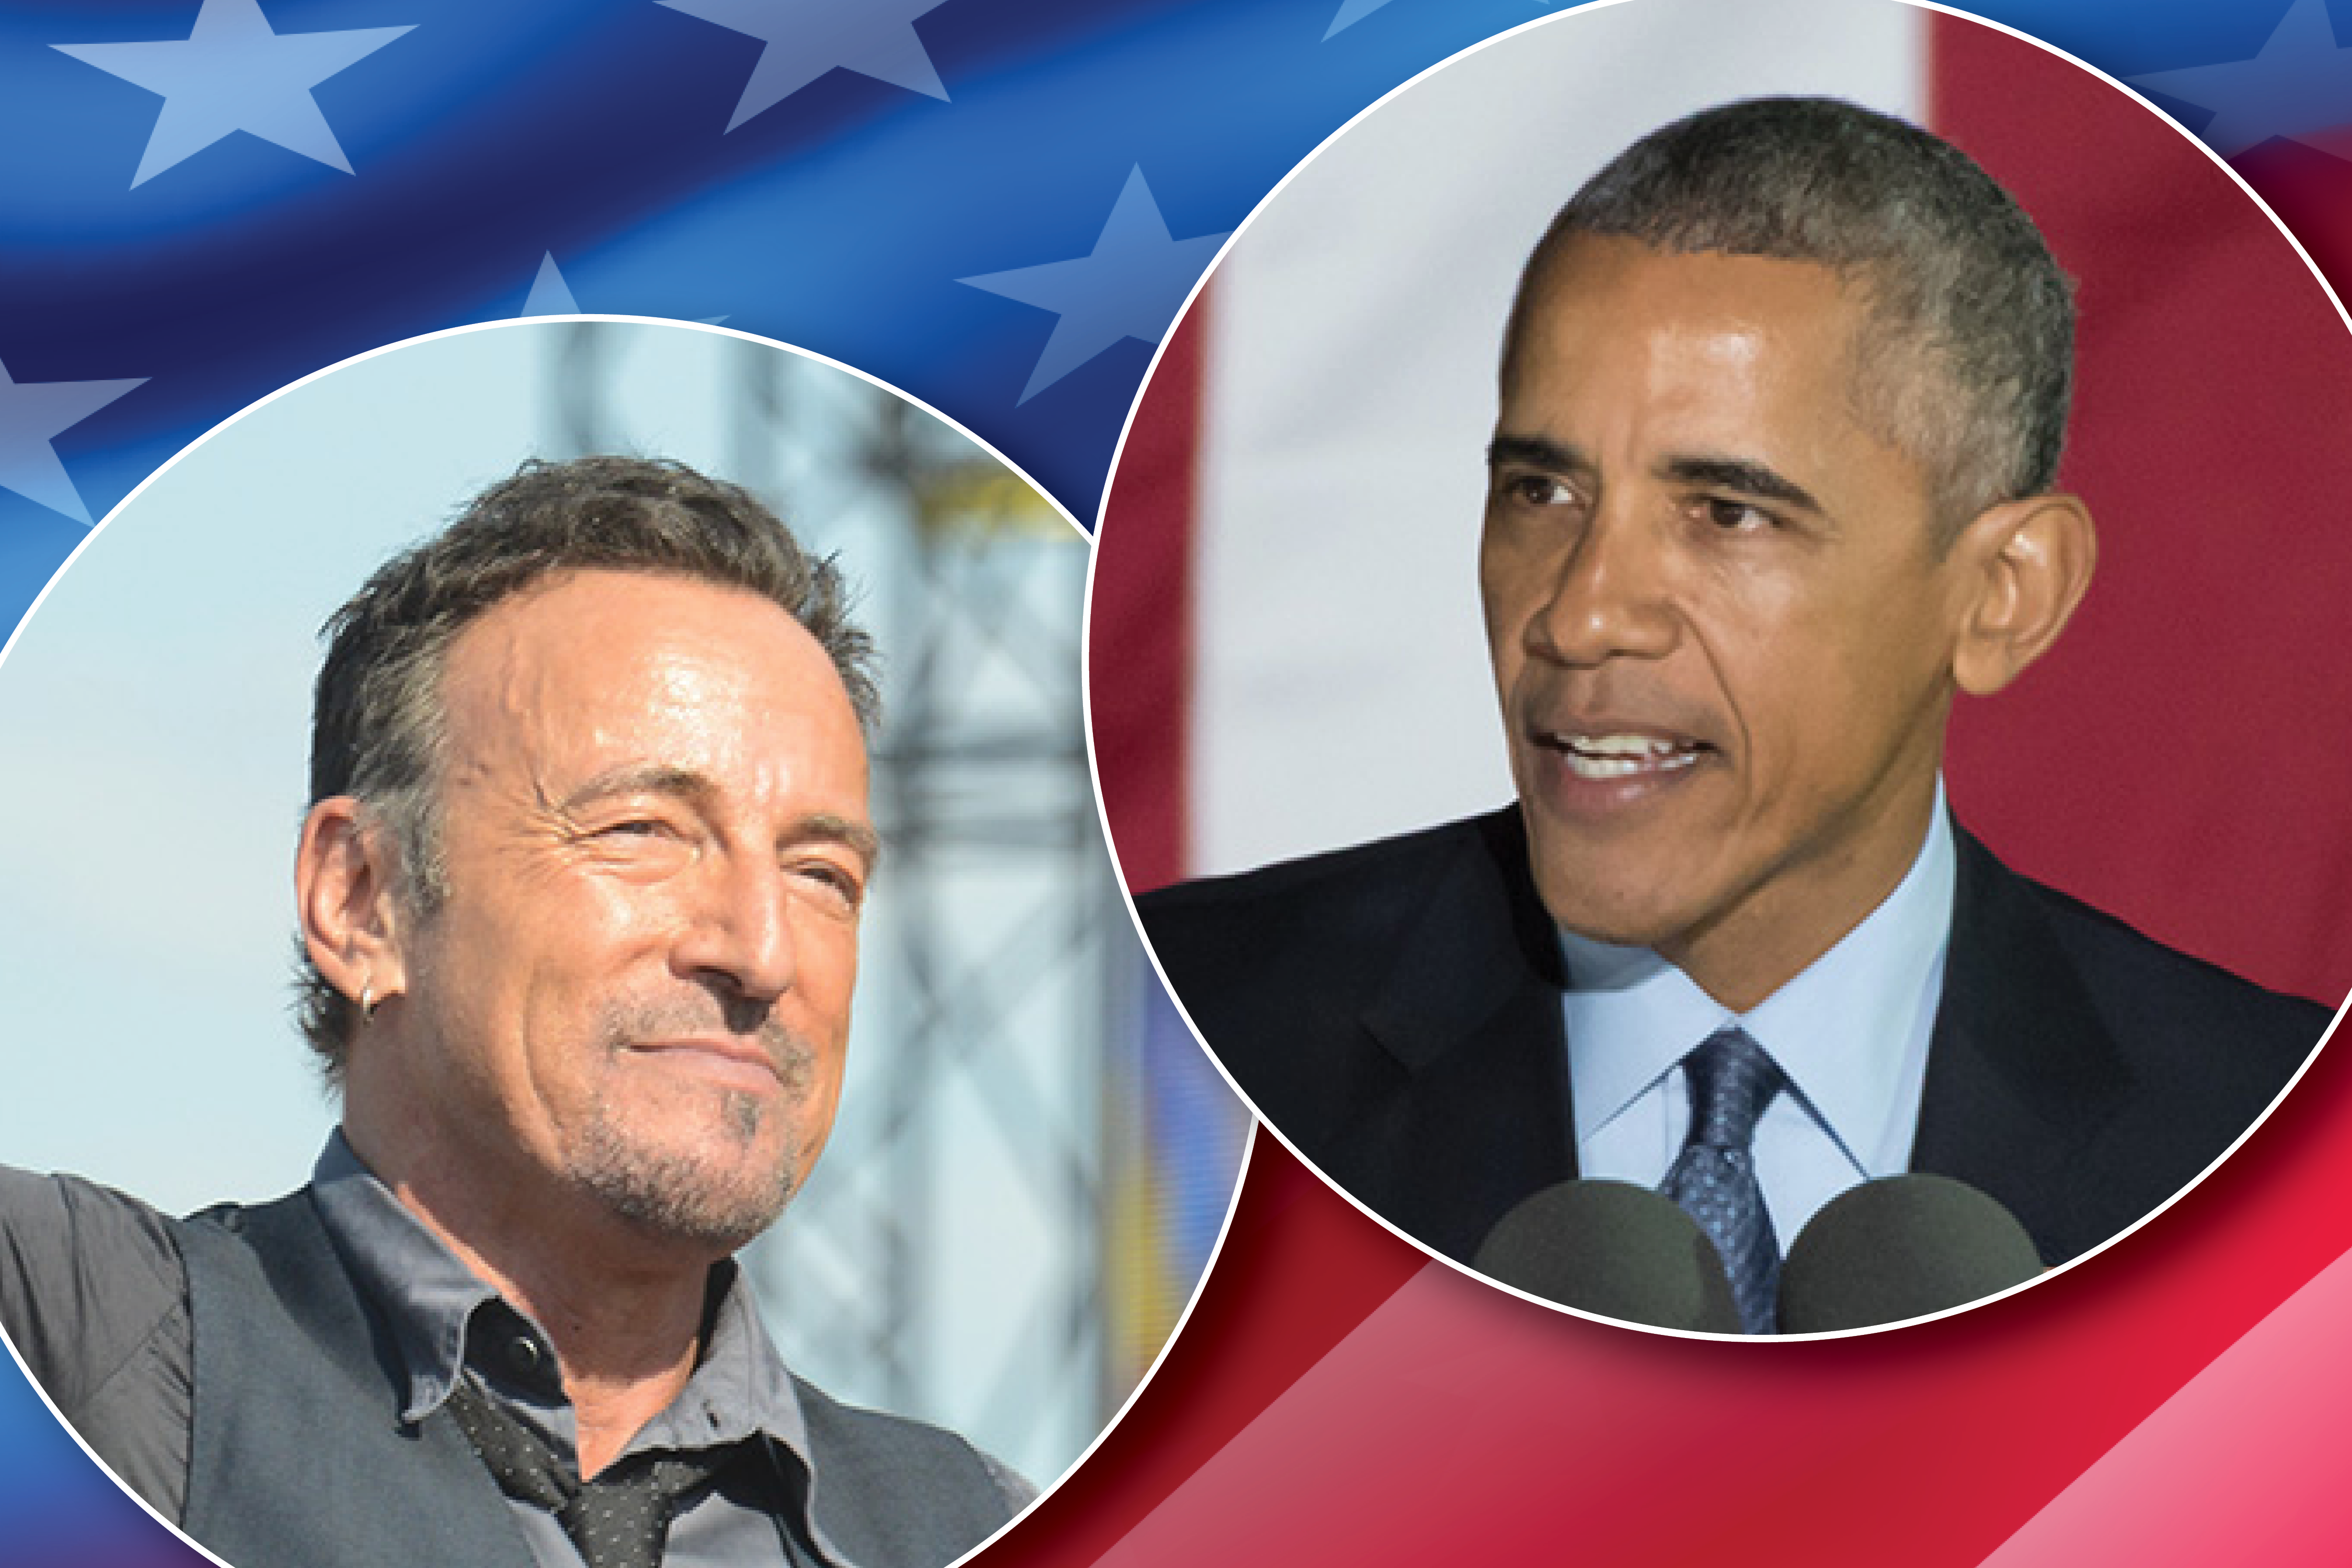 Bruce Springsteen (left) and Barack Obama (right) with flag background